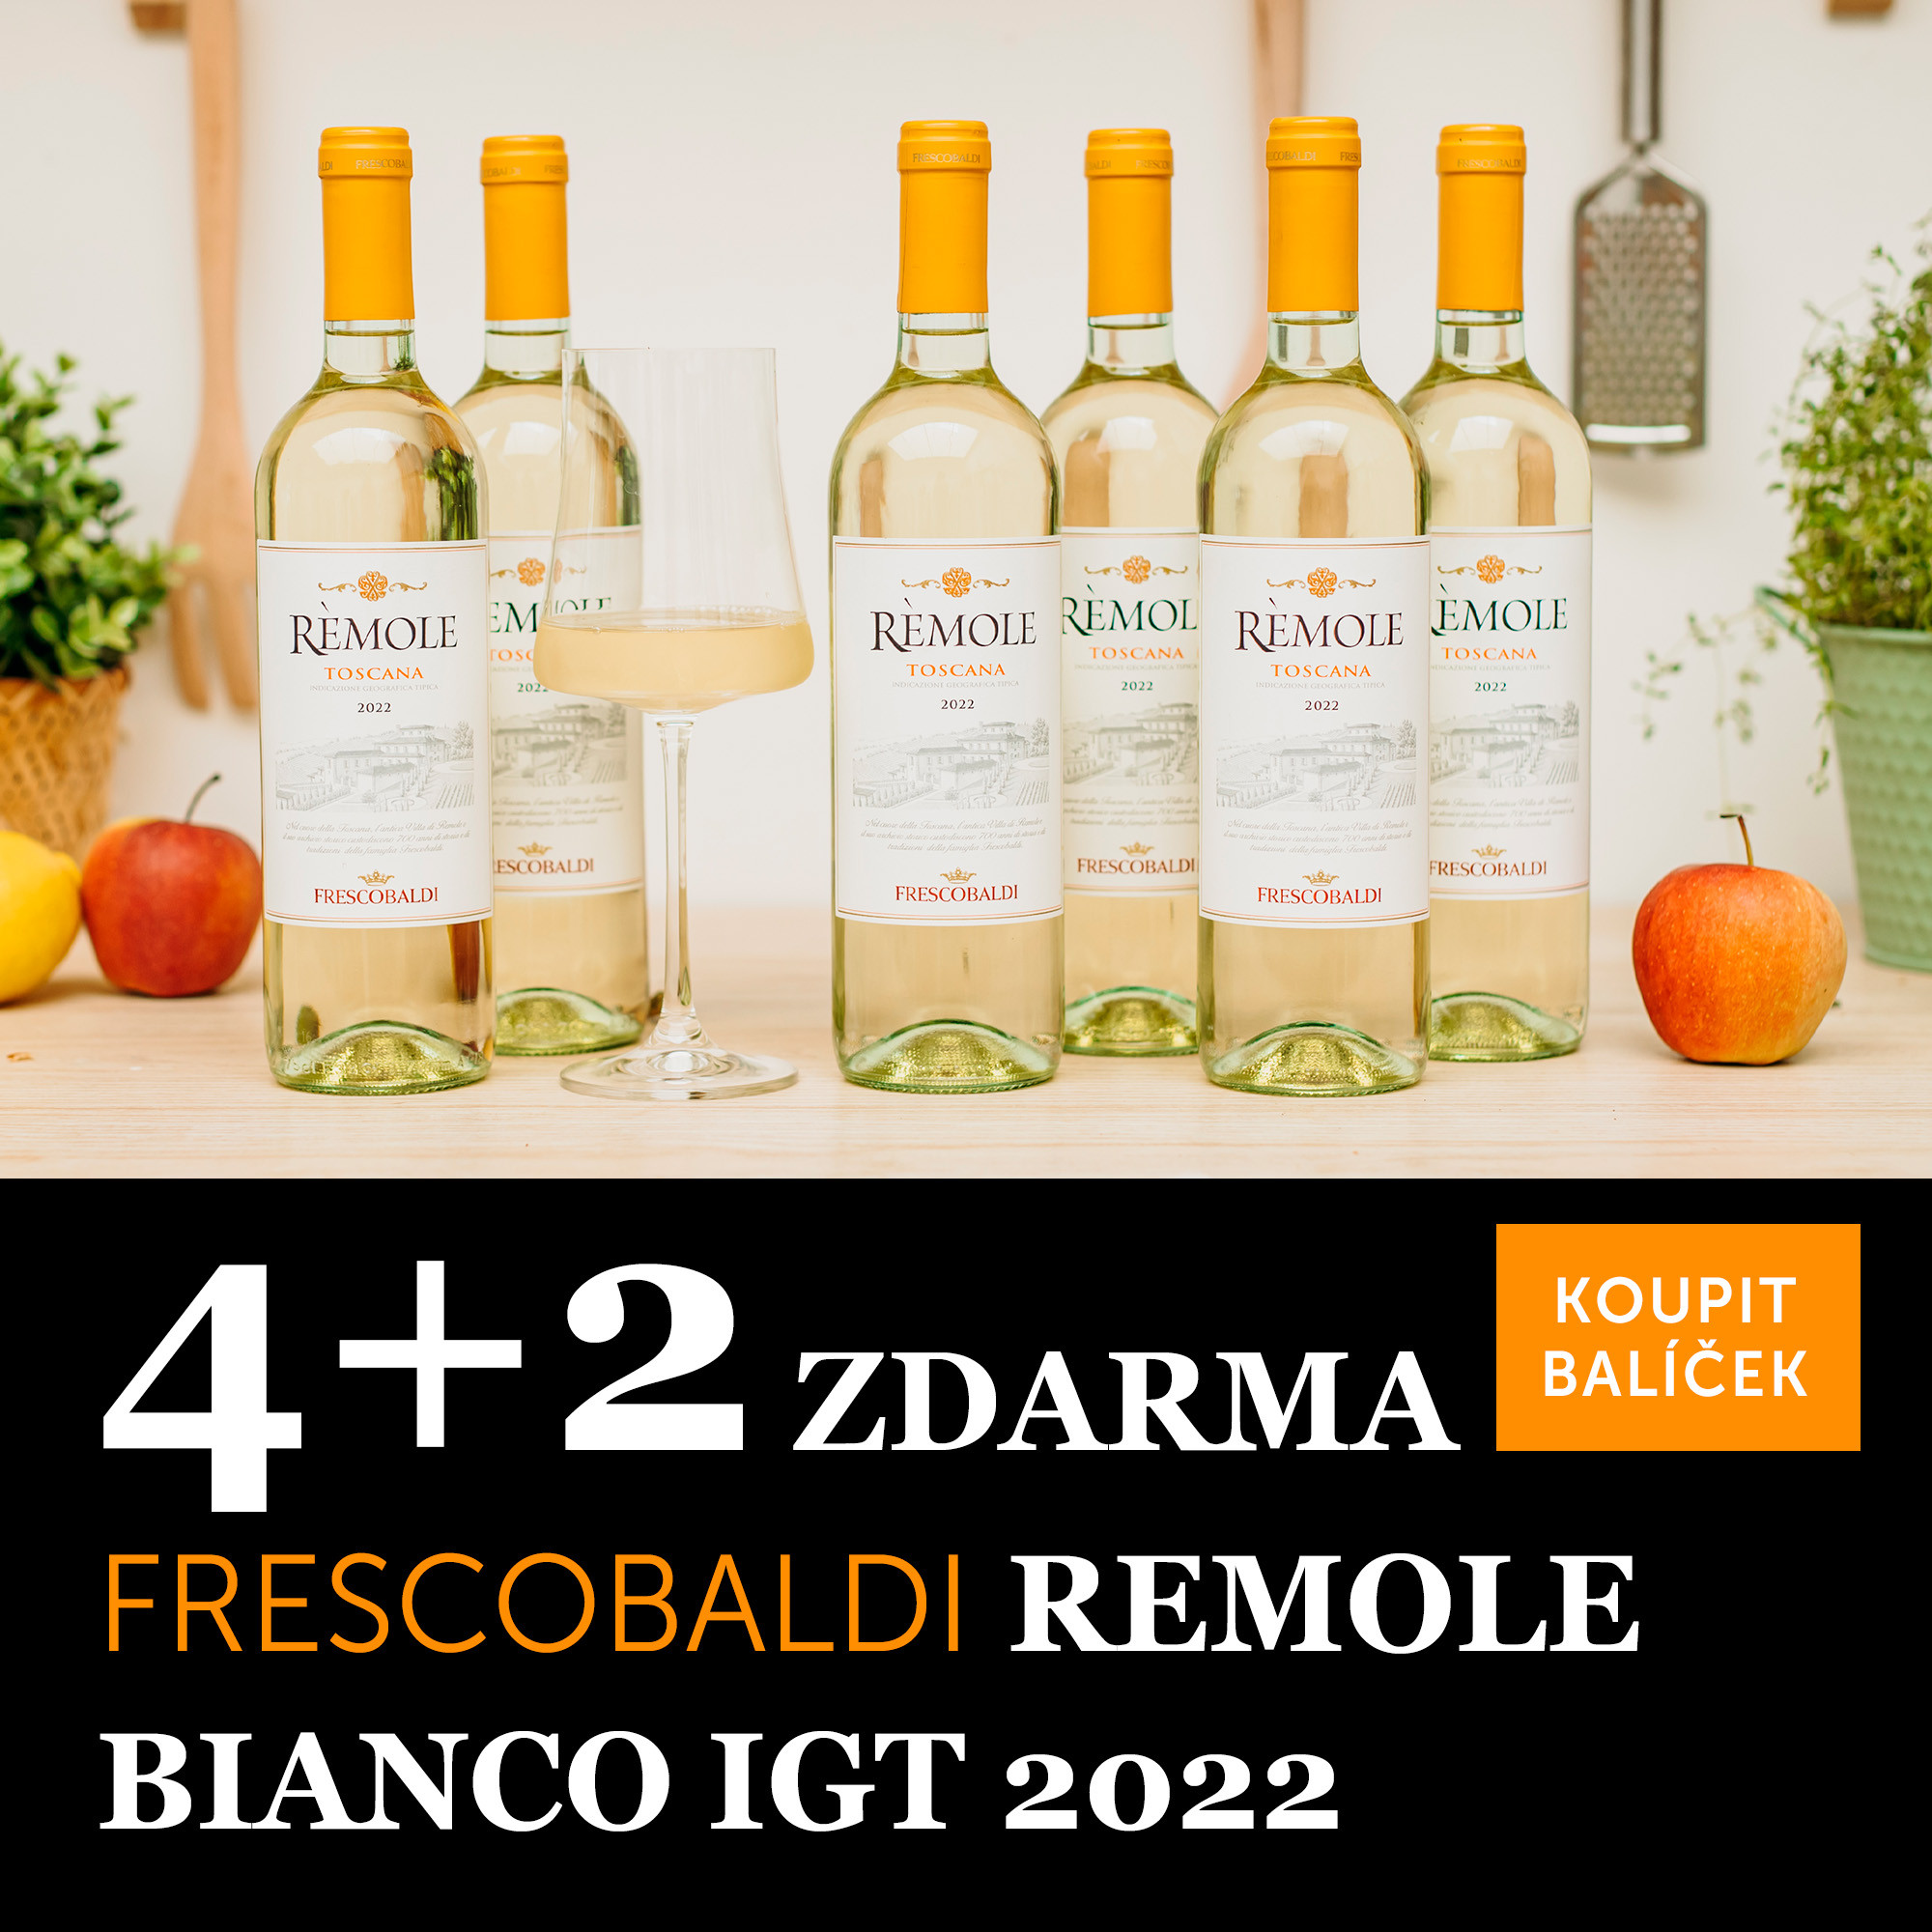 Remole Bianco IGT 2022 - 4+2 zdarma - UKONČENO